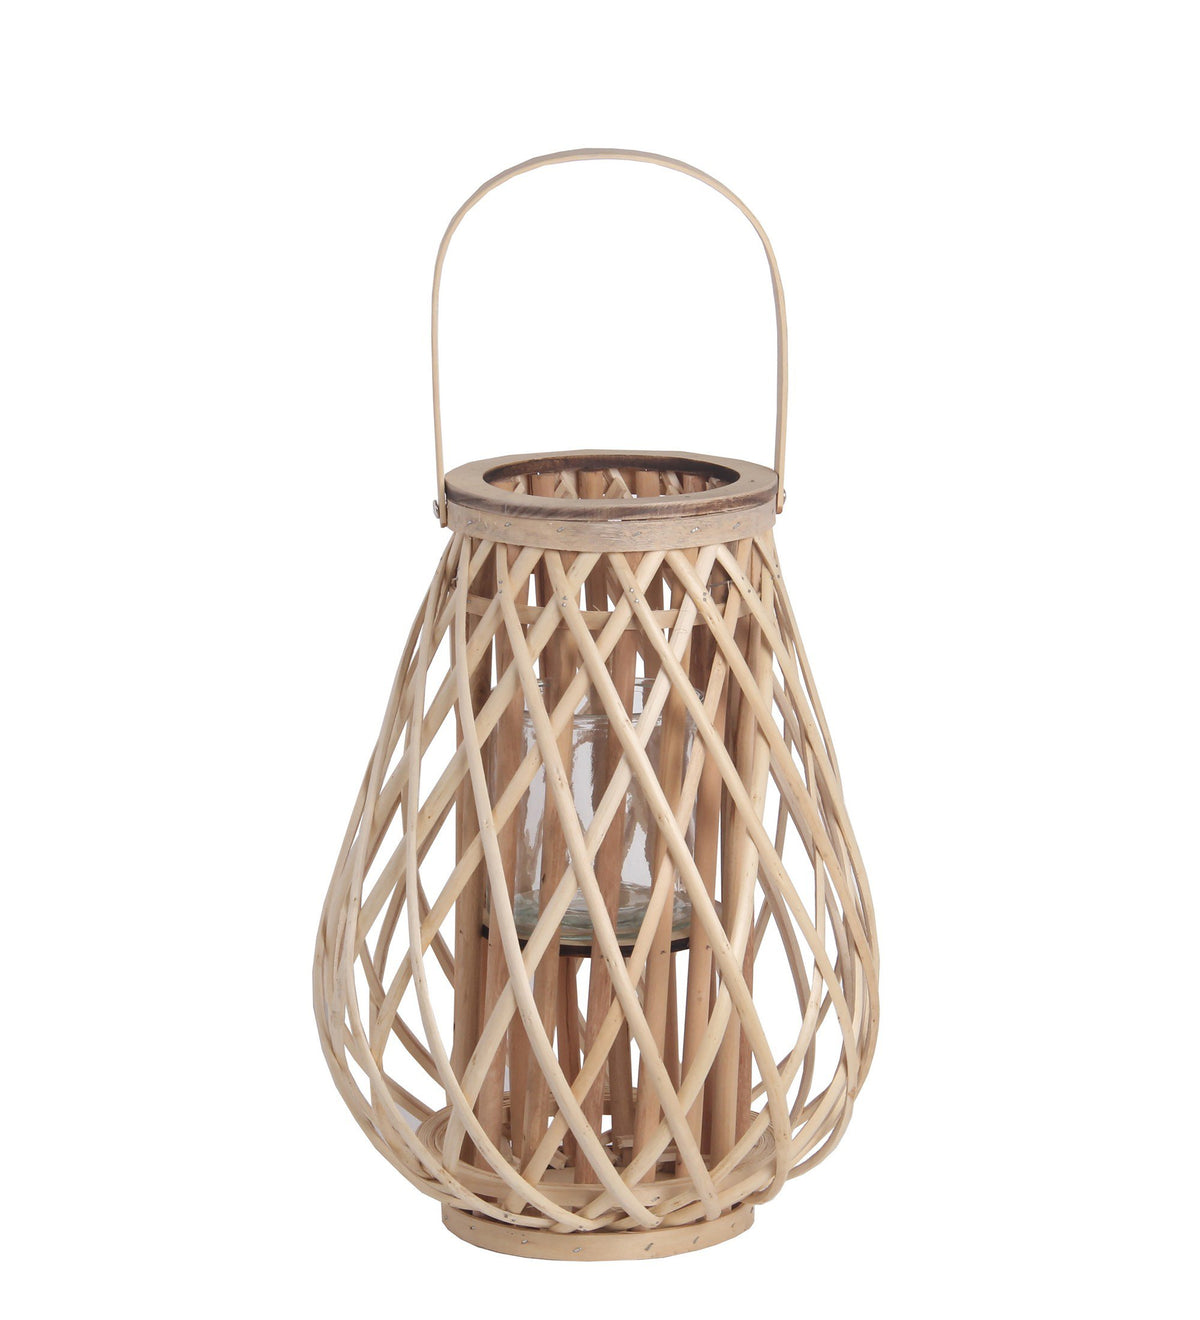 Bellied Bamboo Lantern with Lattice Design and Handle, Medium, Brown - BM218637